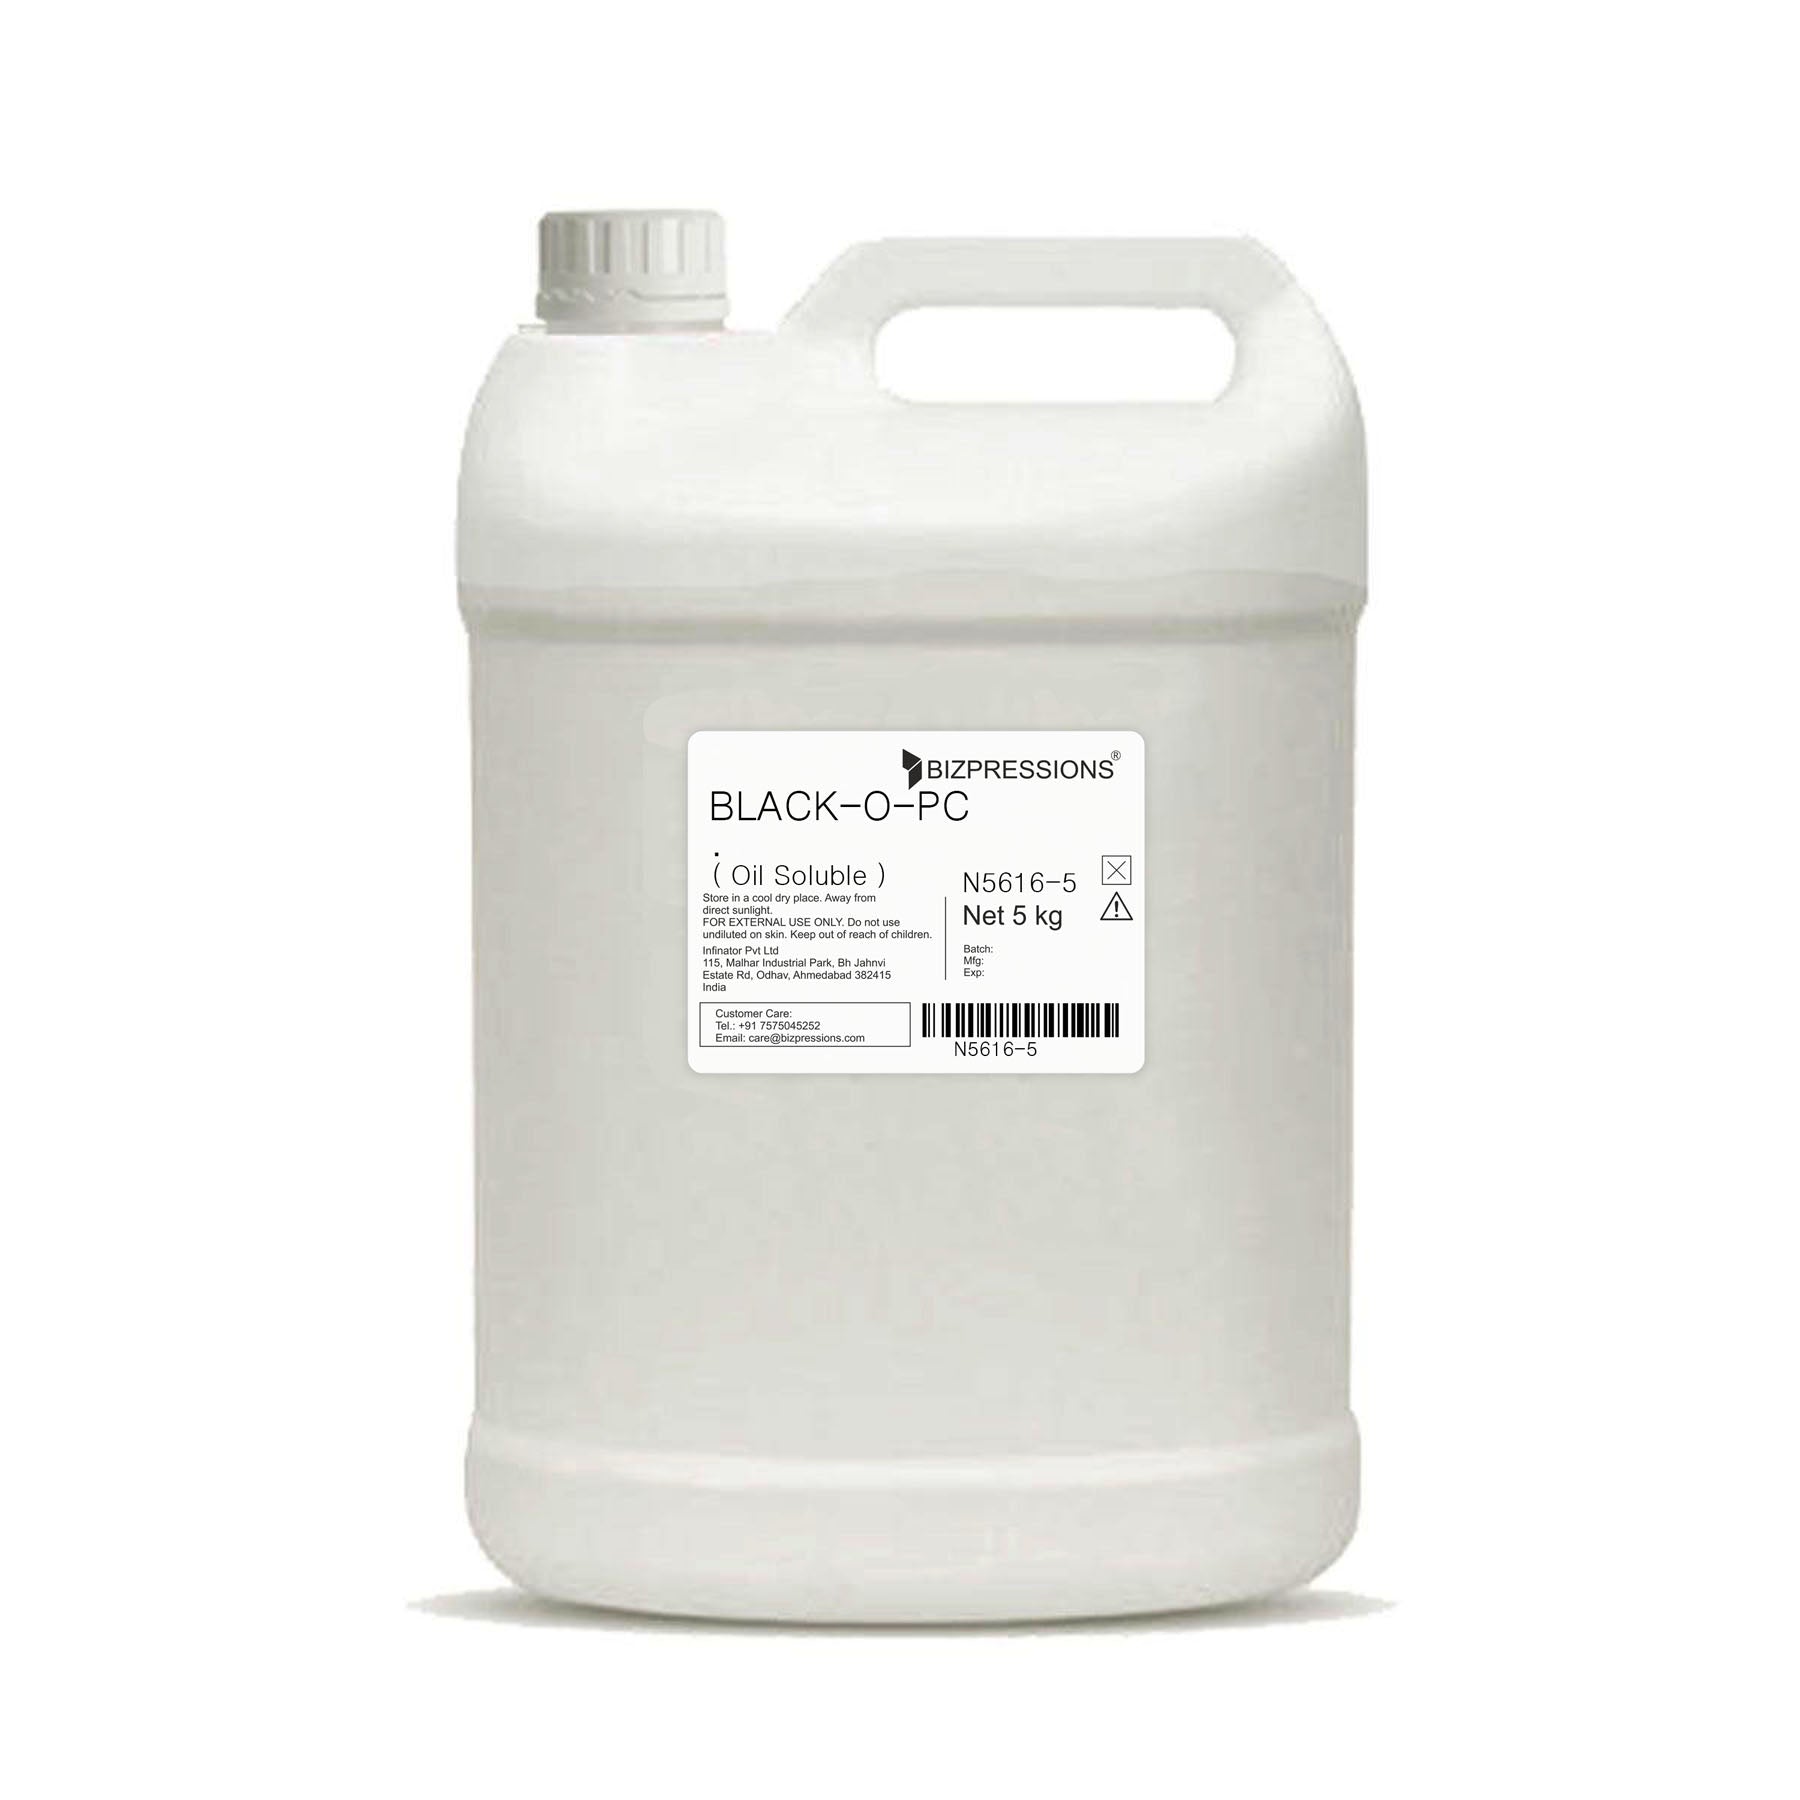 BLACK-O-PC - Fragrance ( Oil Soluble ) - 5 kg